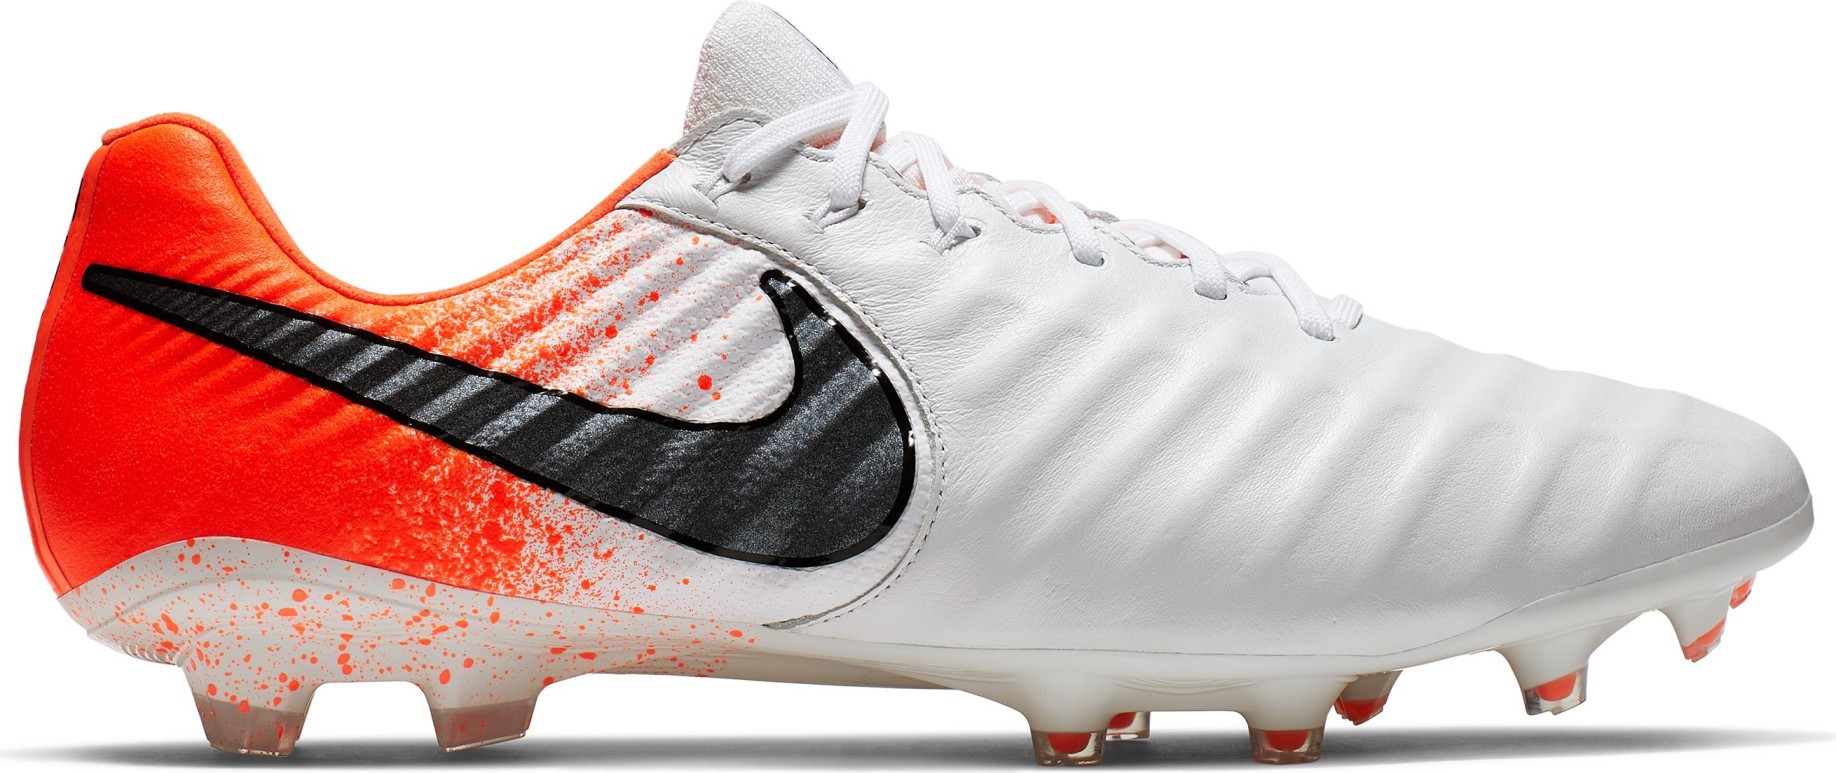 Las botas de fútbol Nike Tiempo Legend VII Elite FG Euforia Pack colore blanco -